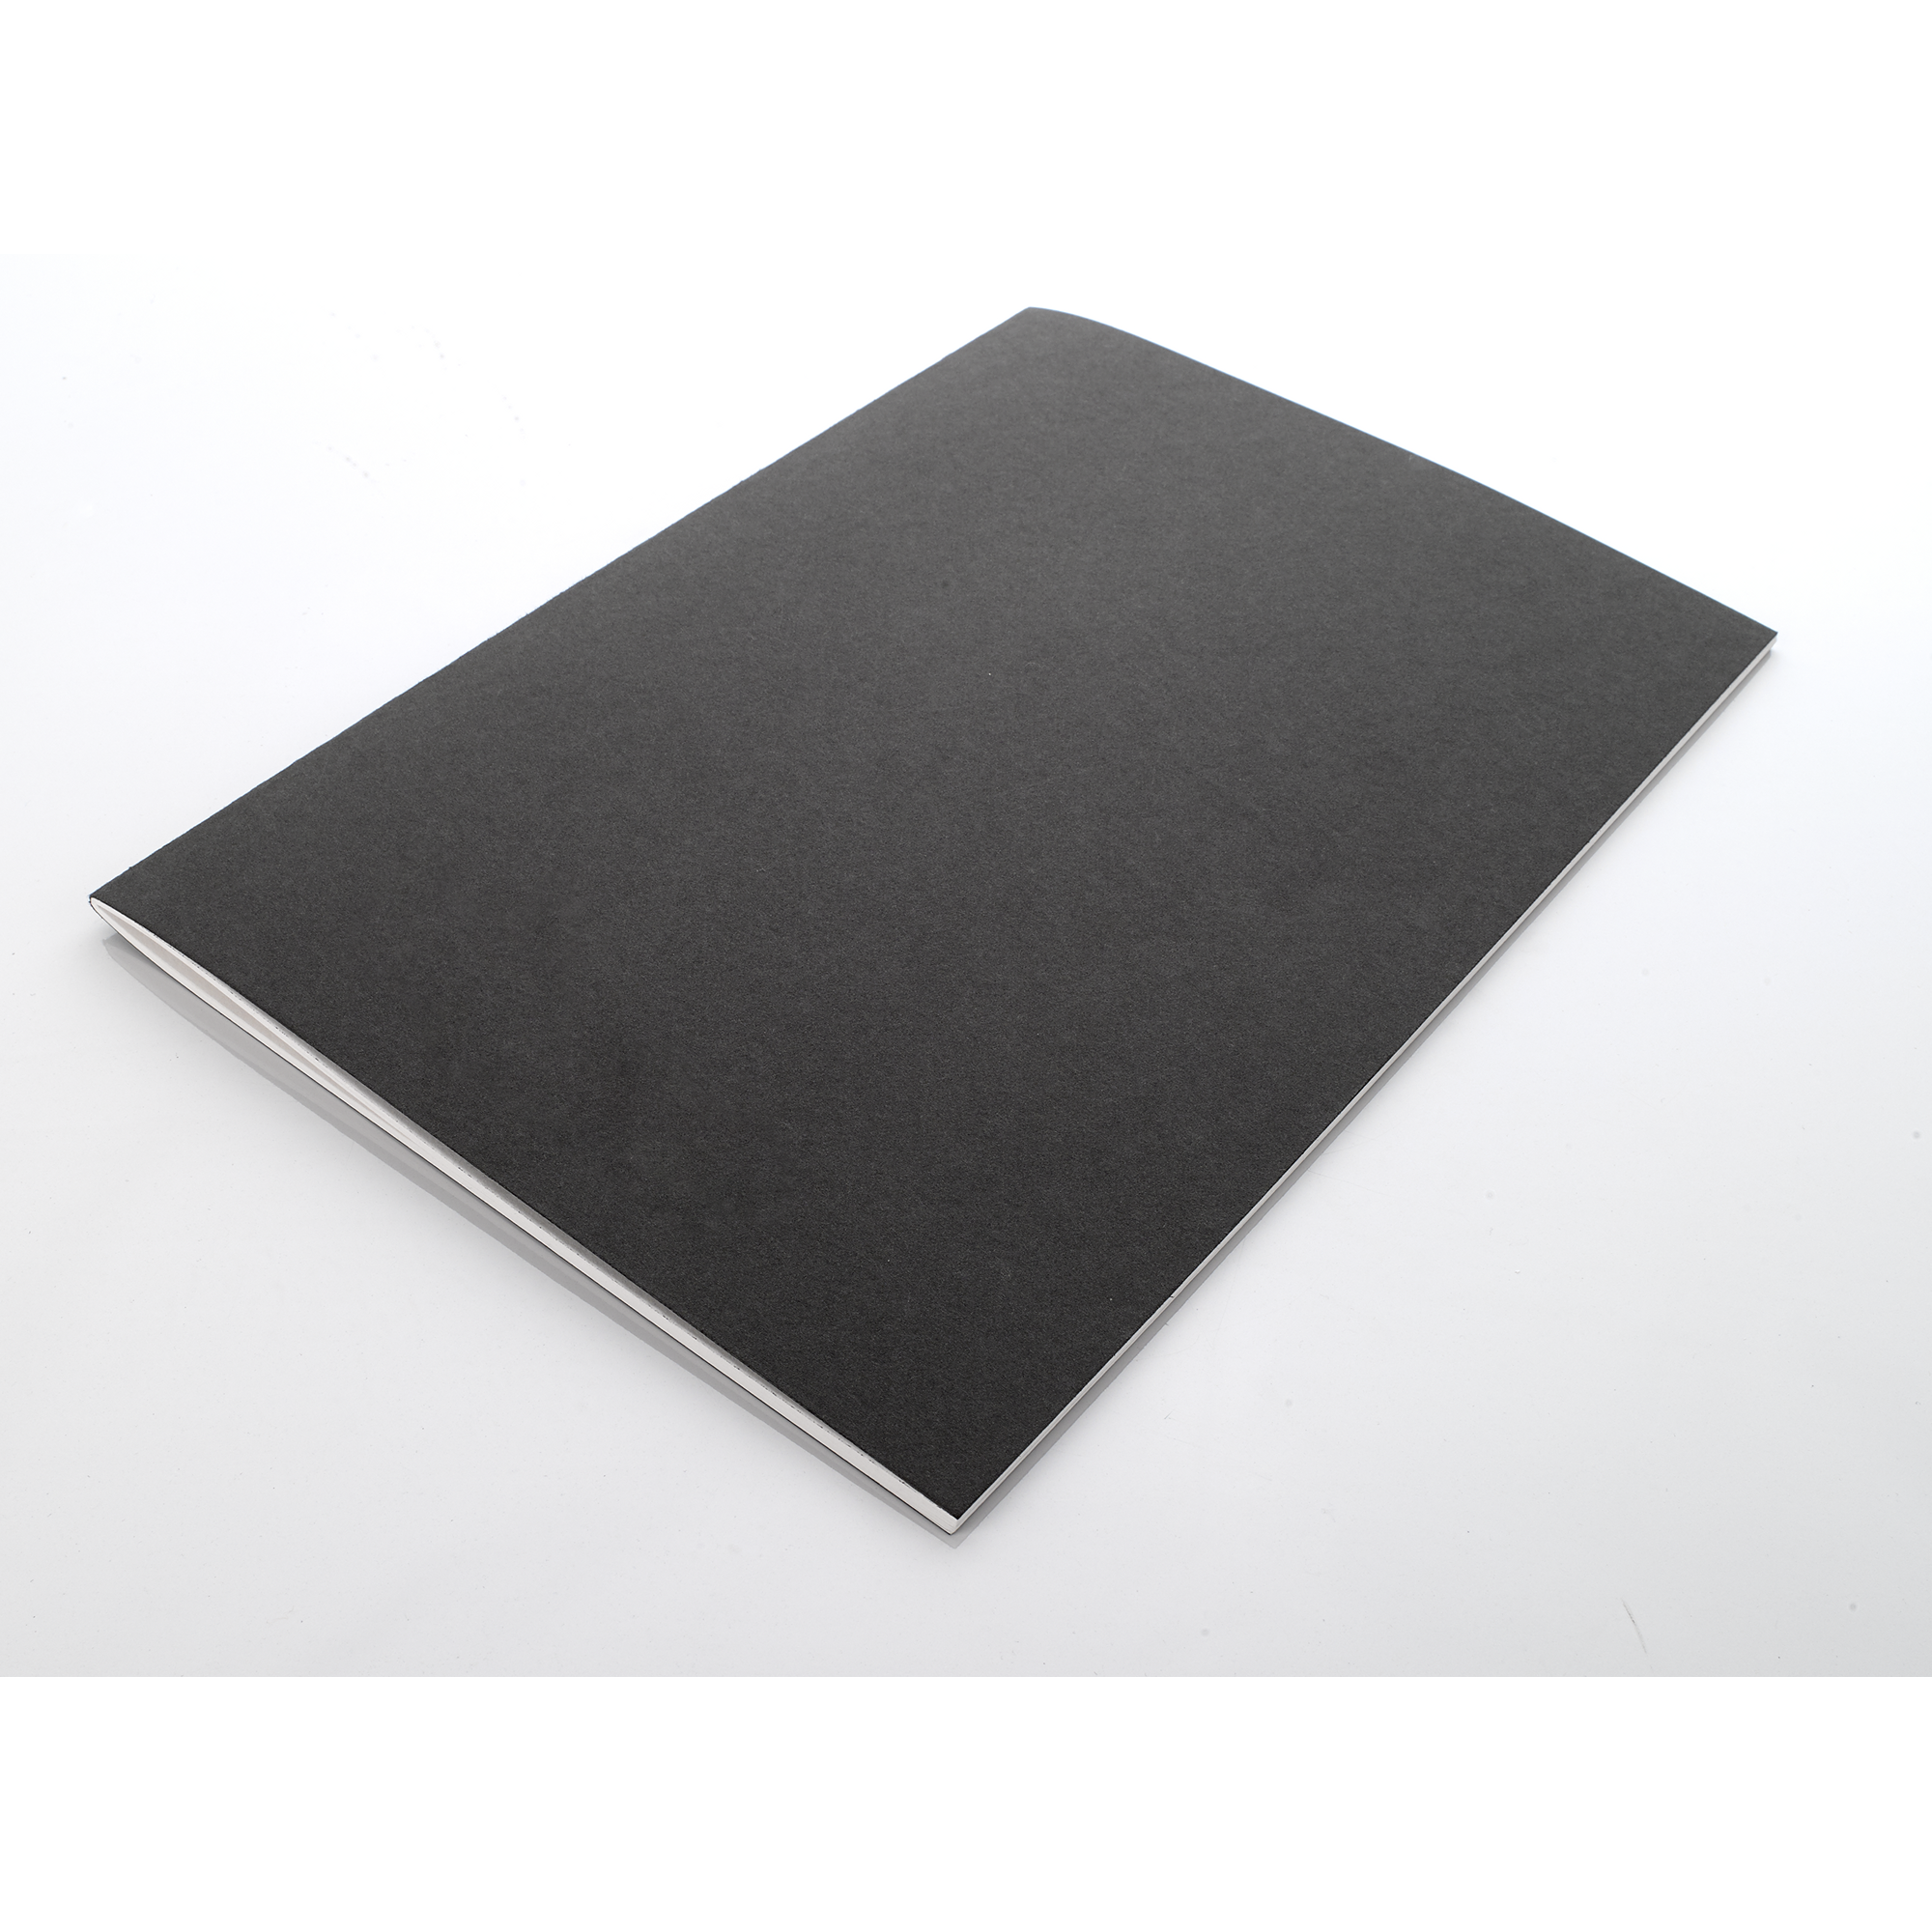 Specialist Crafts Black Stapled Sketchbooks - A3 - Pack of 10